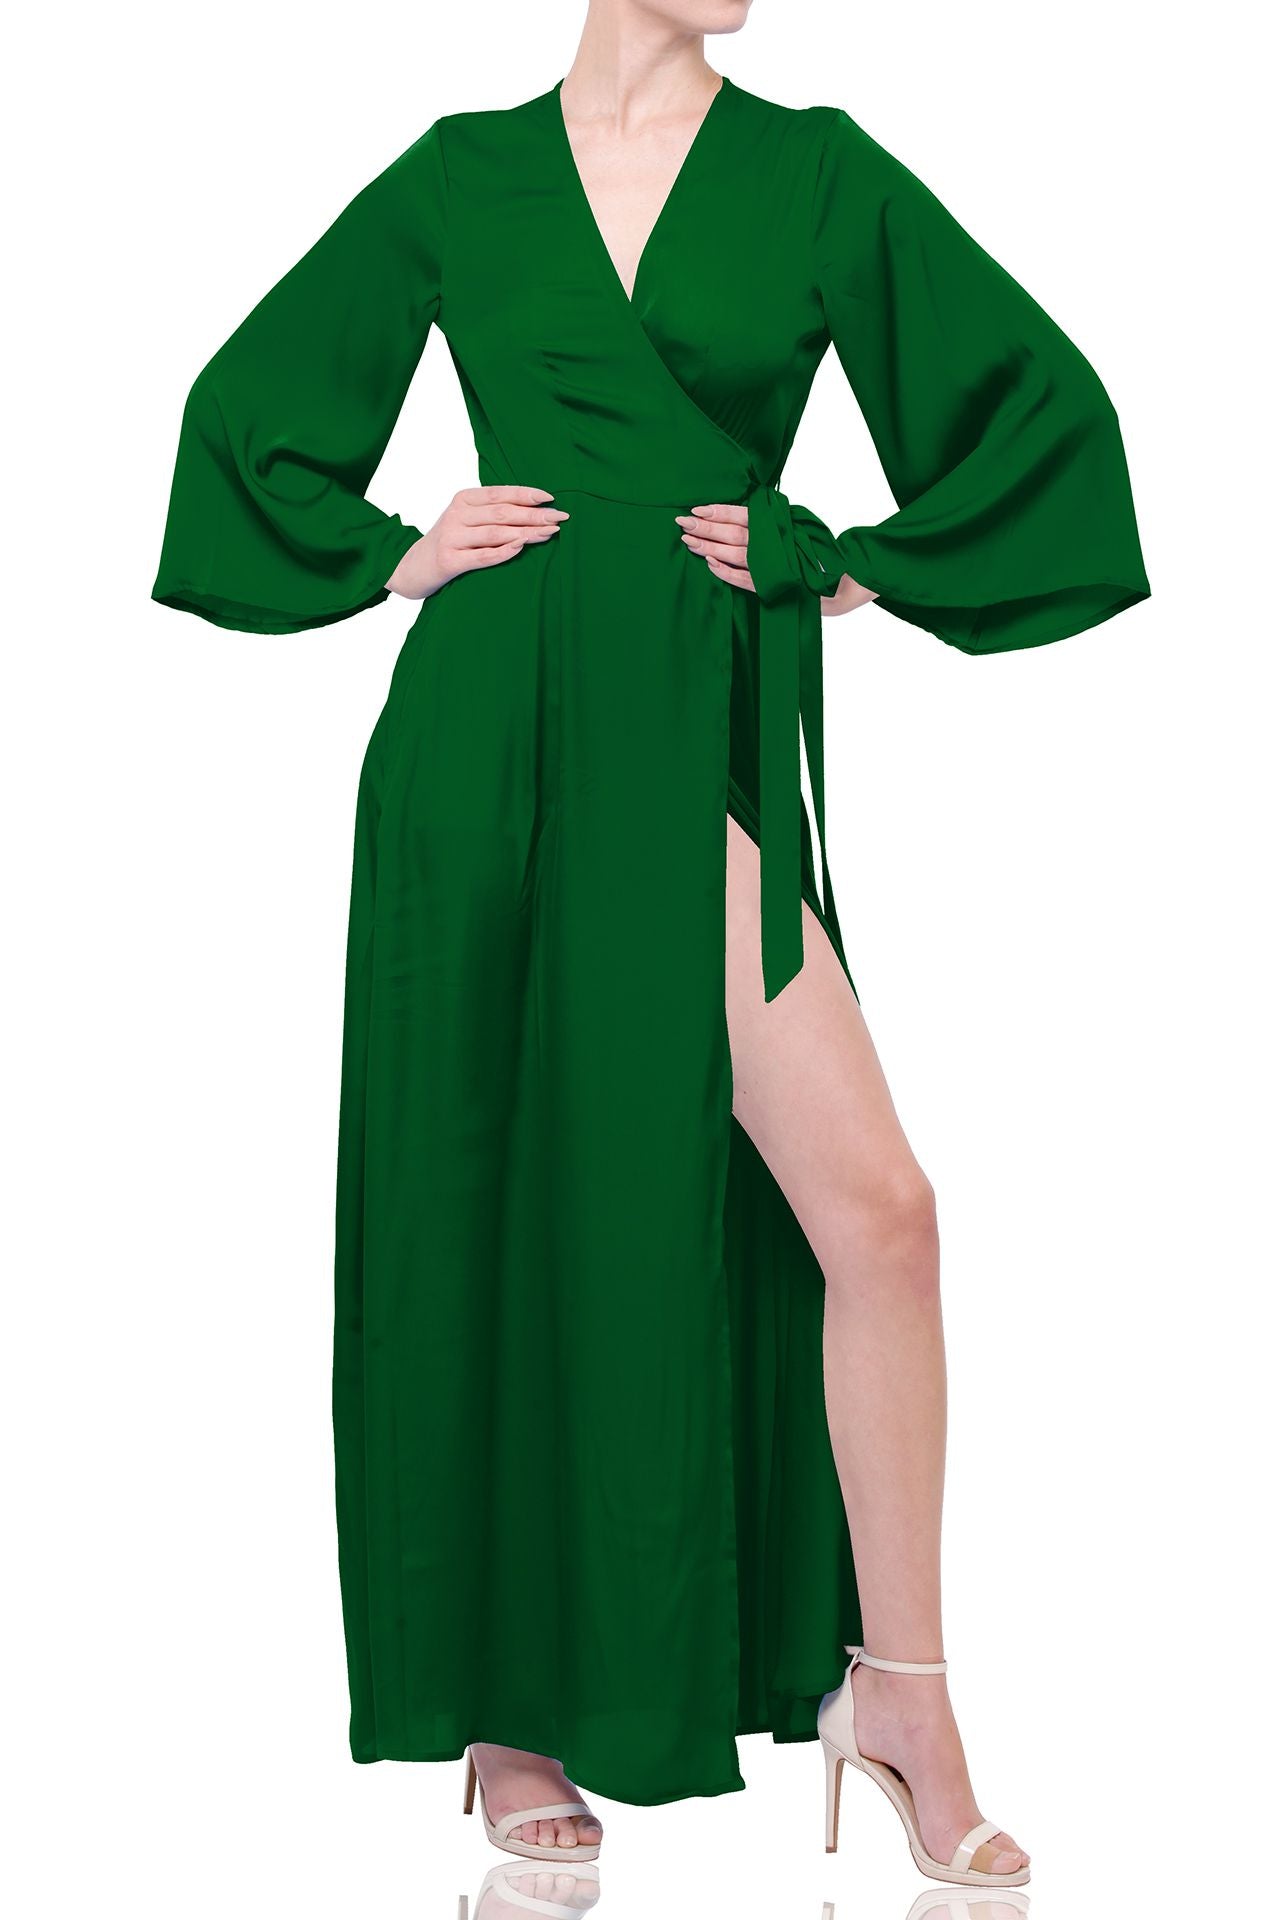 "green wrap maxi dress" "Kyle X Shahida" "women's long sleeve wrap dress" "wrap maxi dress"